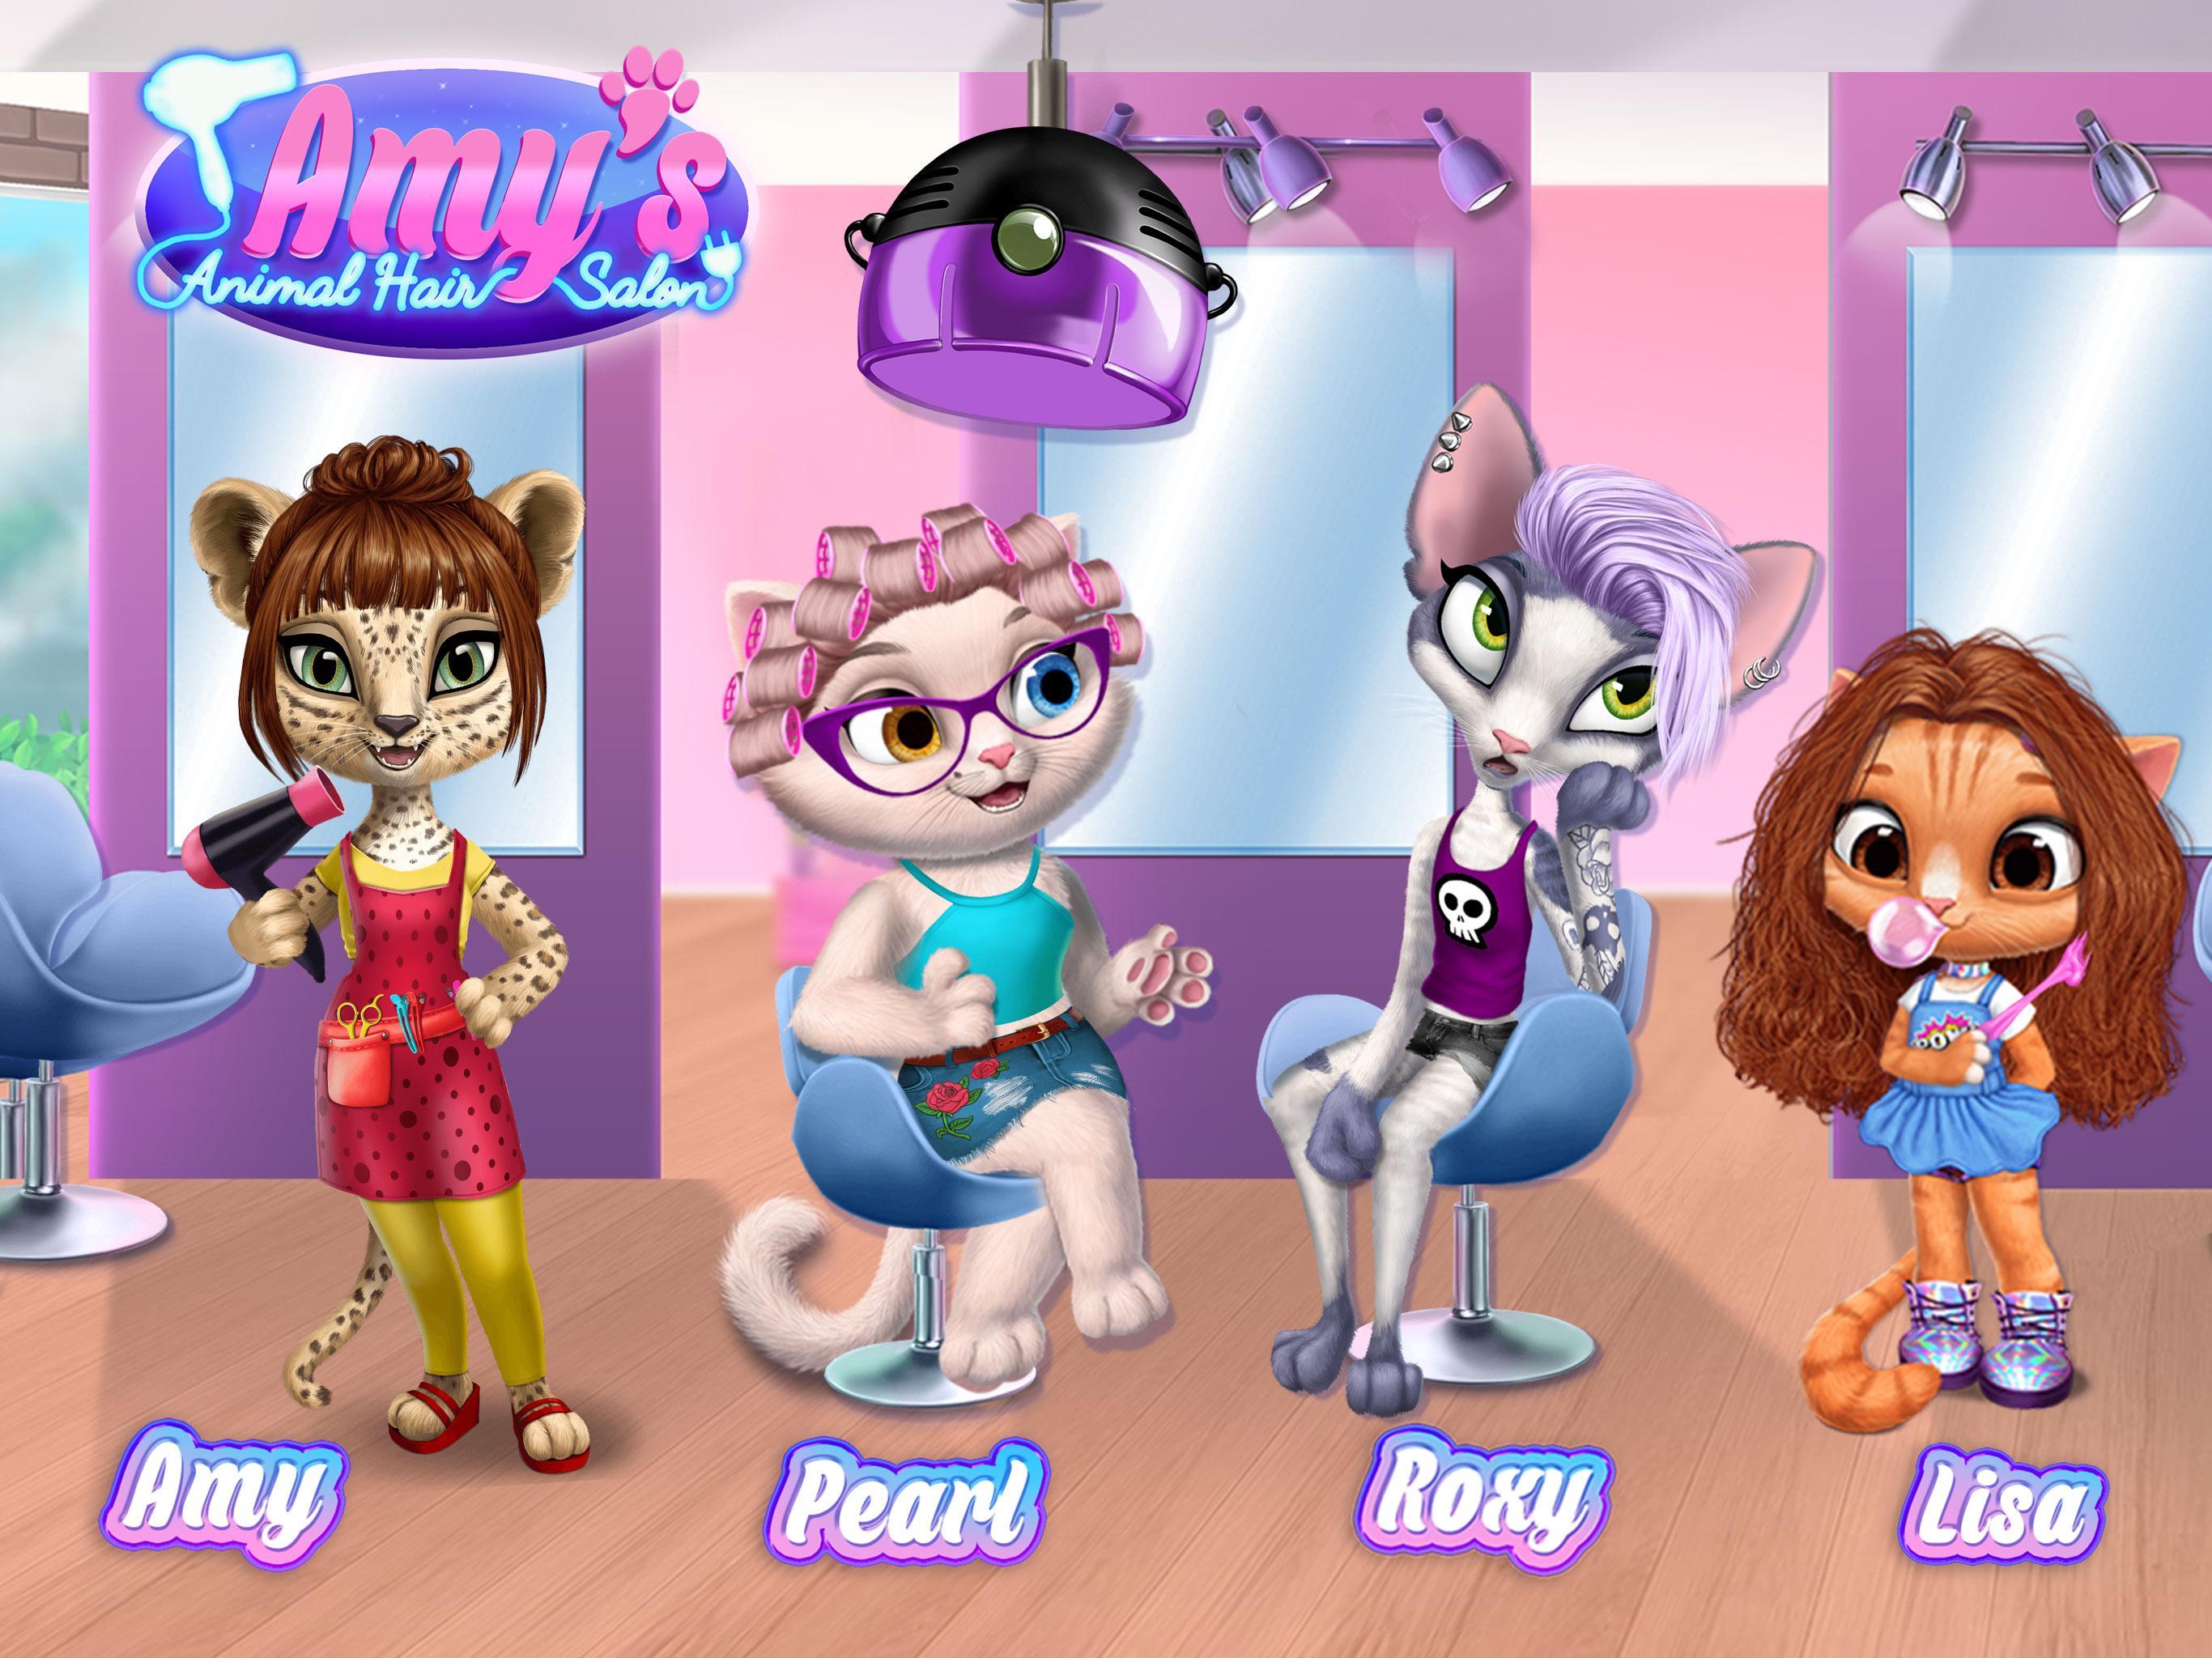 Amy's Animal Hair Salon - Cat Fashion & Hairstyles 4.0.50002 Screenshot 21